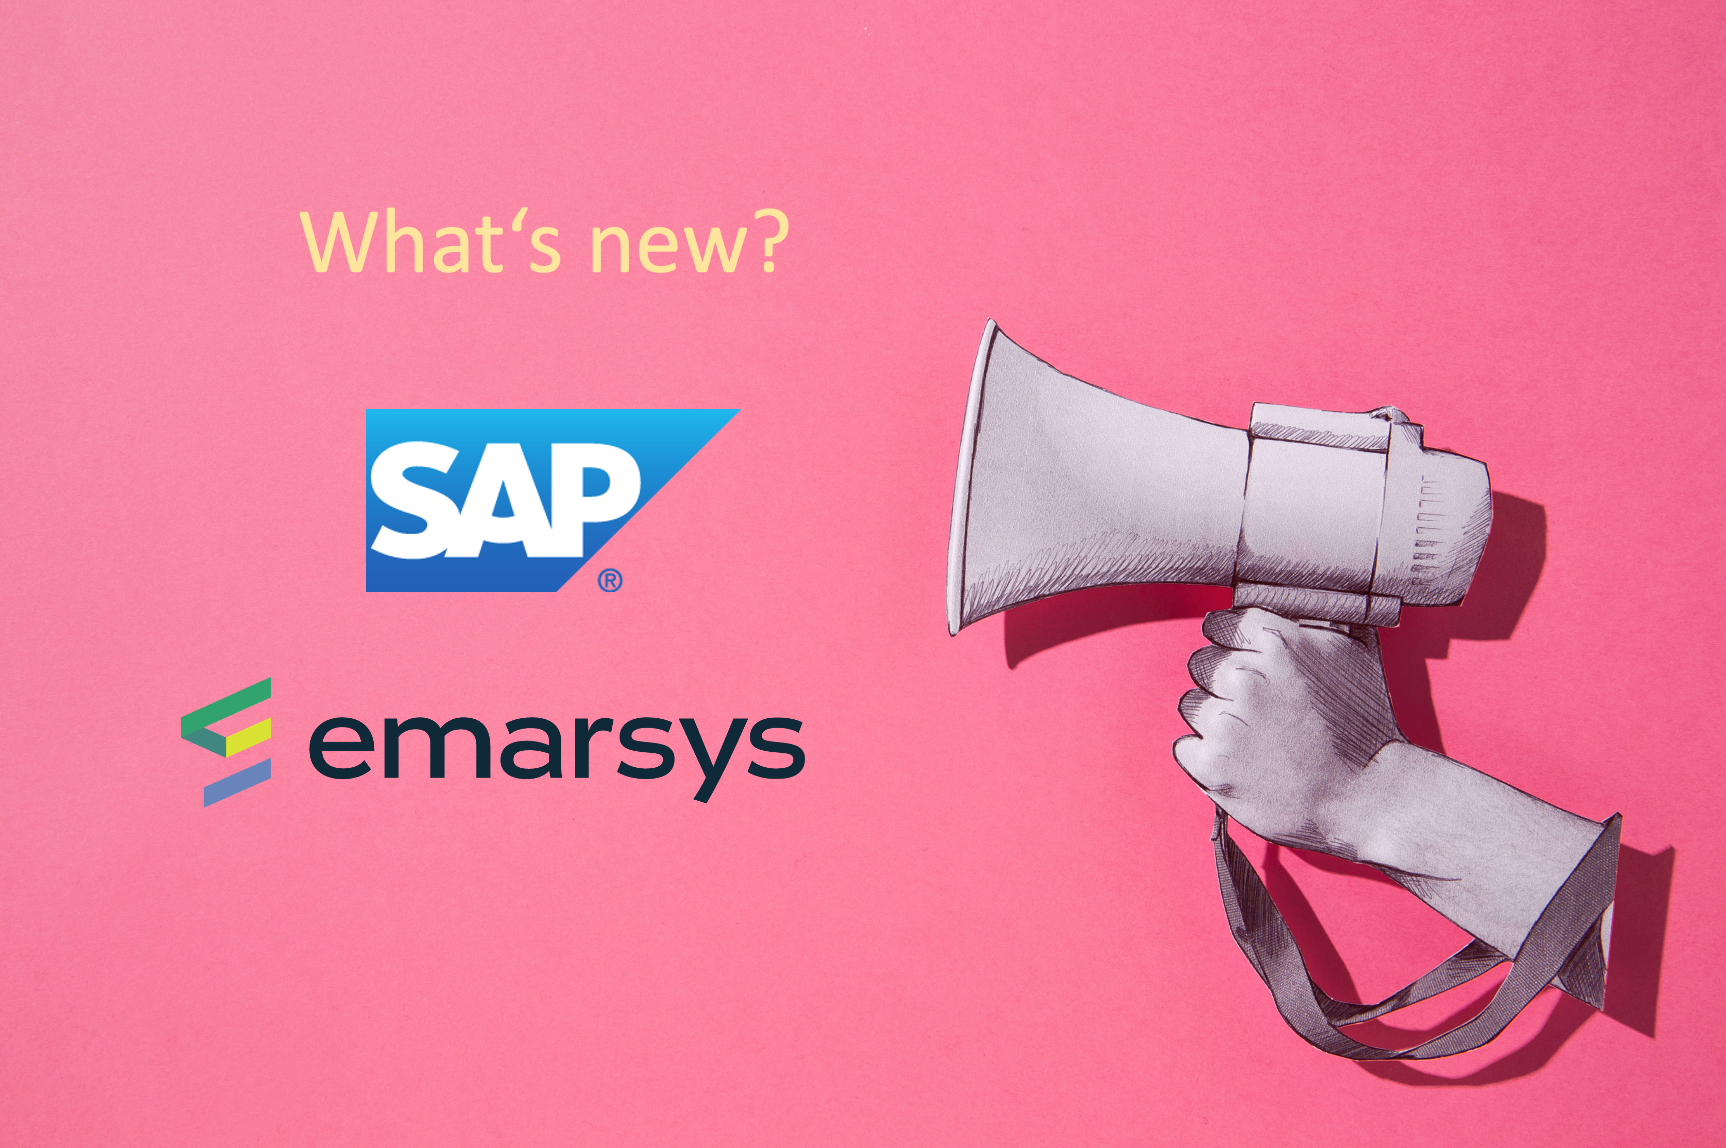 SAP Emarsys Customer Engagement